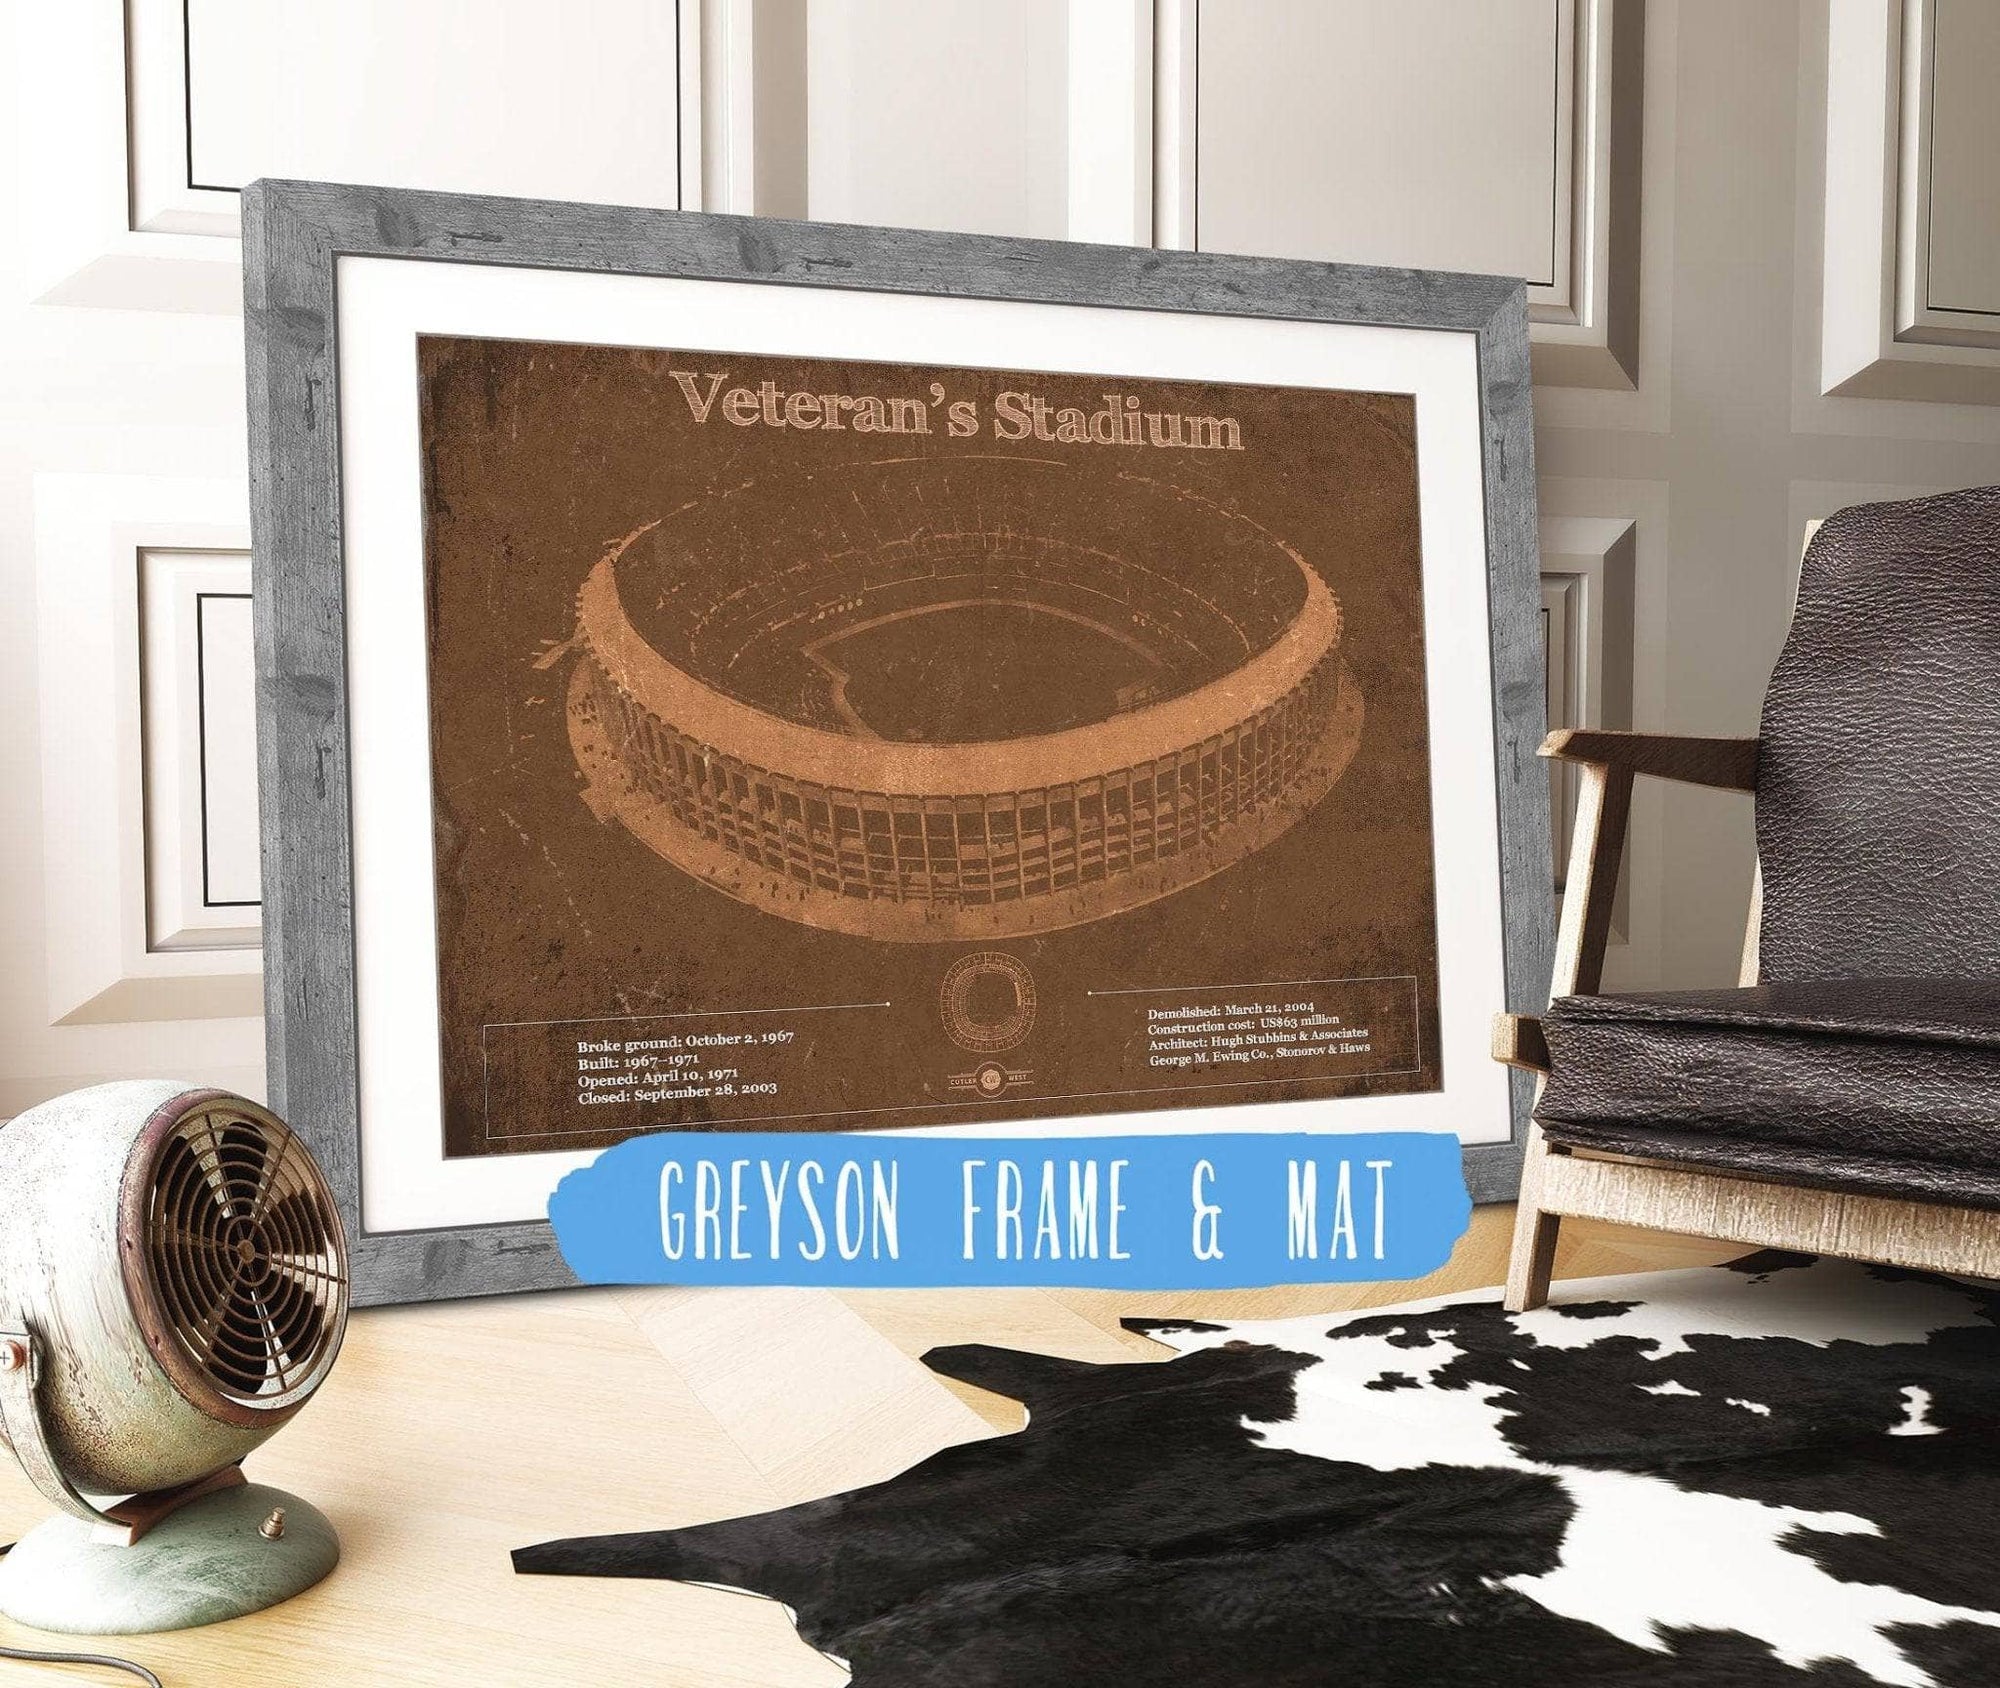 Cutler West Pro Football Collection 14" x 11" / Greyson Frame & Mat Veteran's Stadium - Vintage Philly Stadium Team Art 948212489_6933